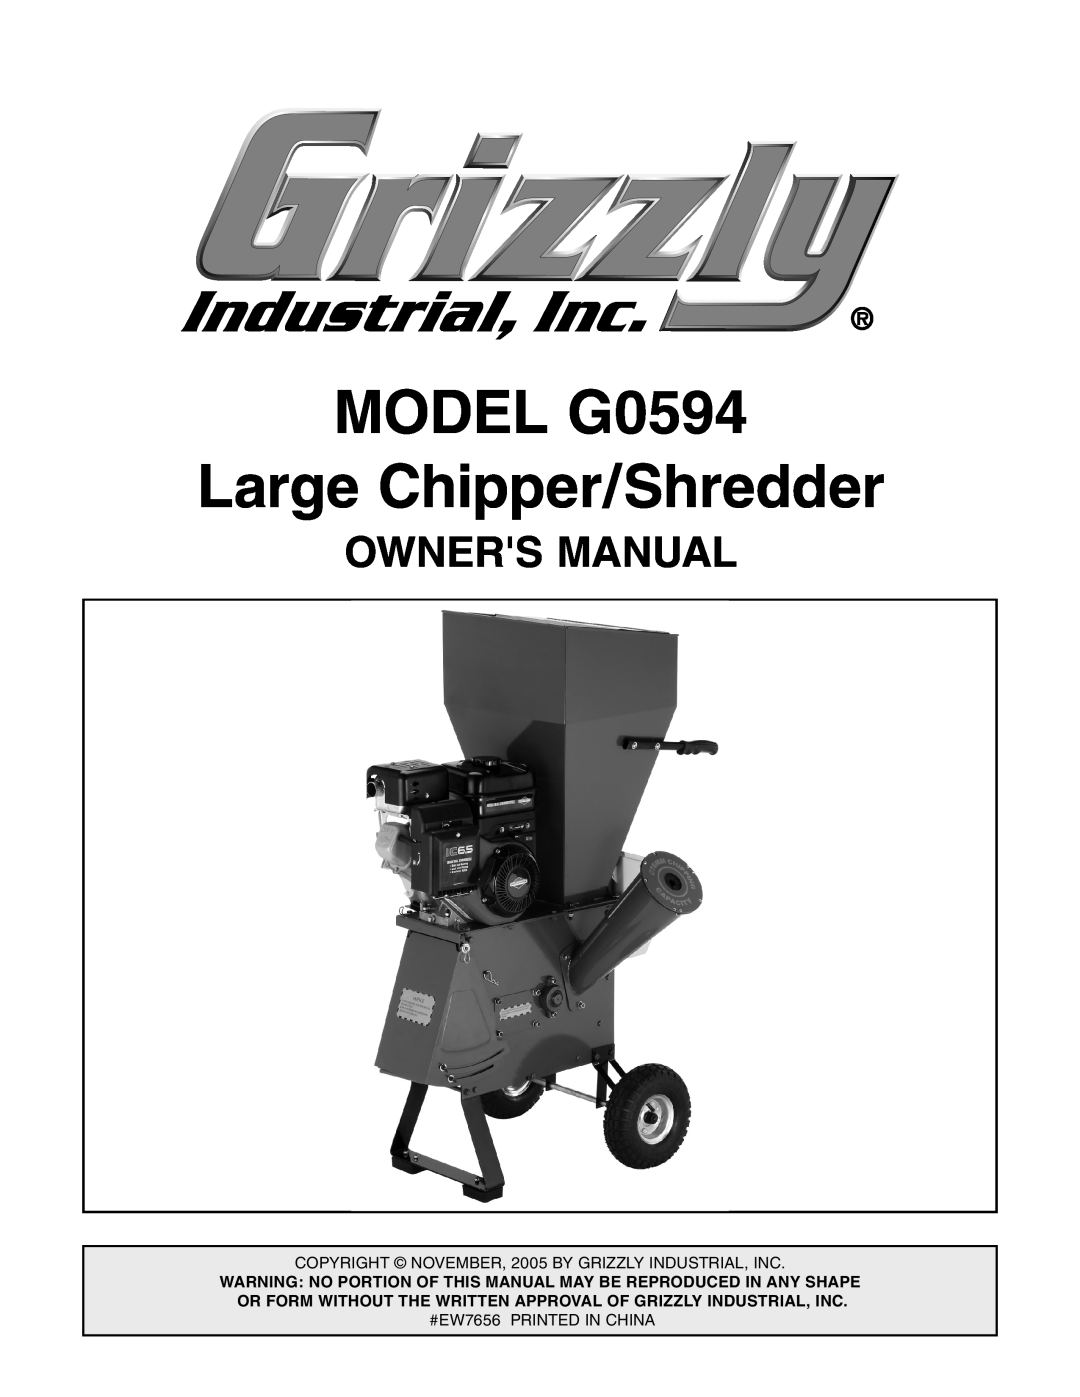 Grizzly owner manual MODEL G0594 Large Chipper/Shredder 